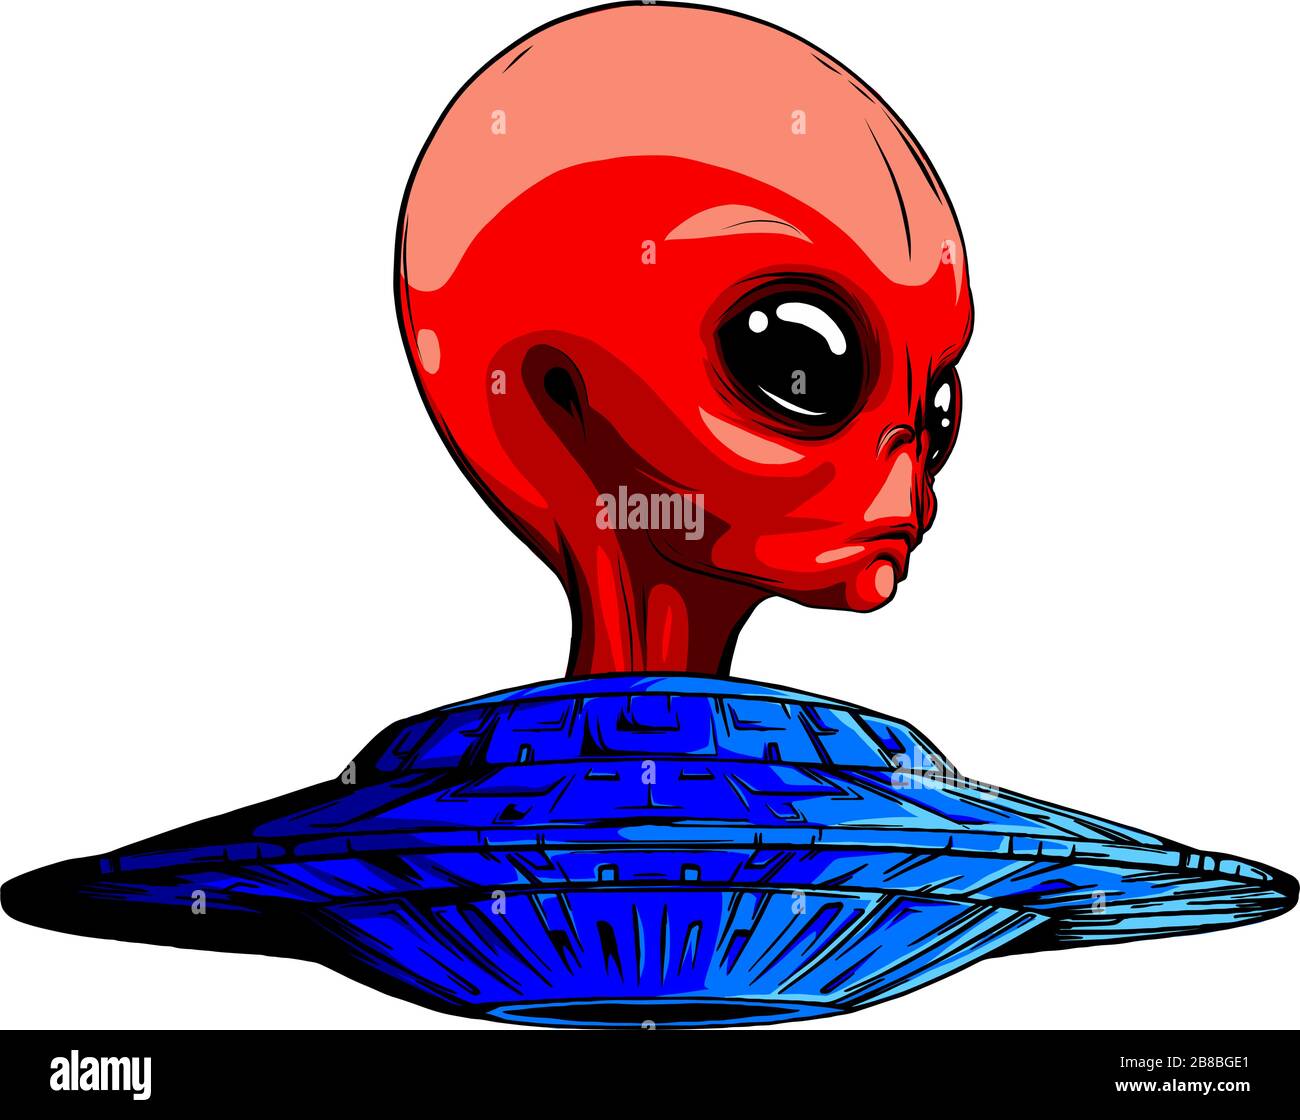 Alien head ufo vector illustration design art Stock Vector